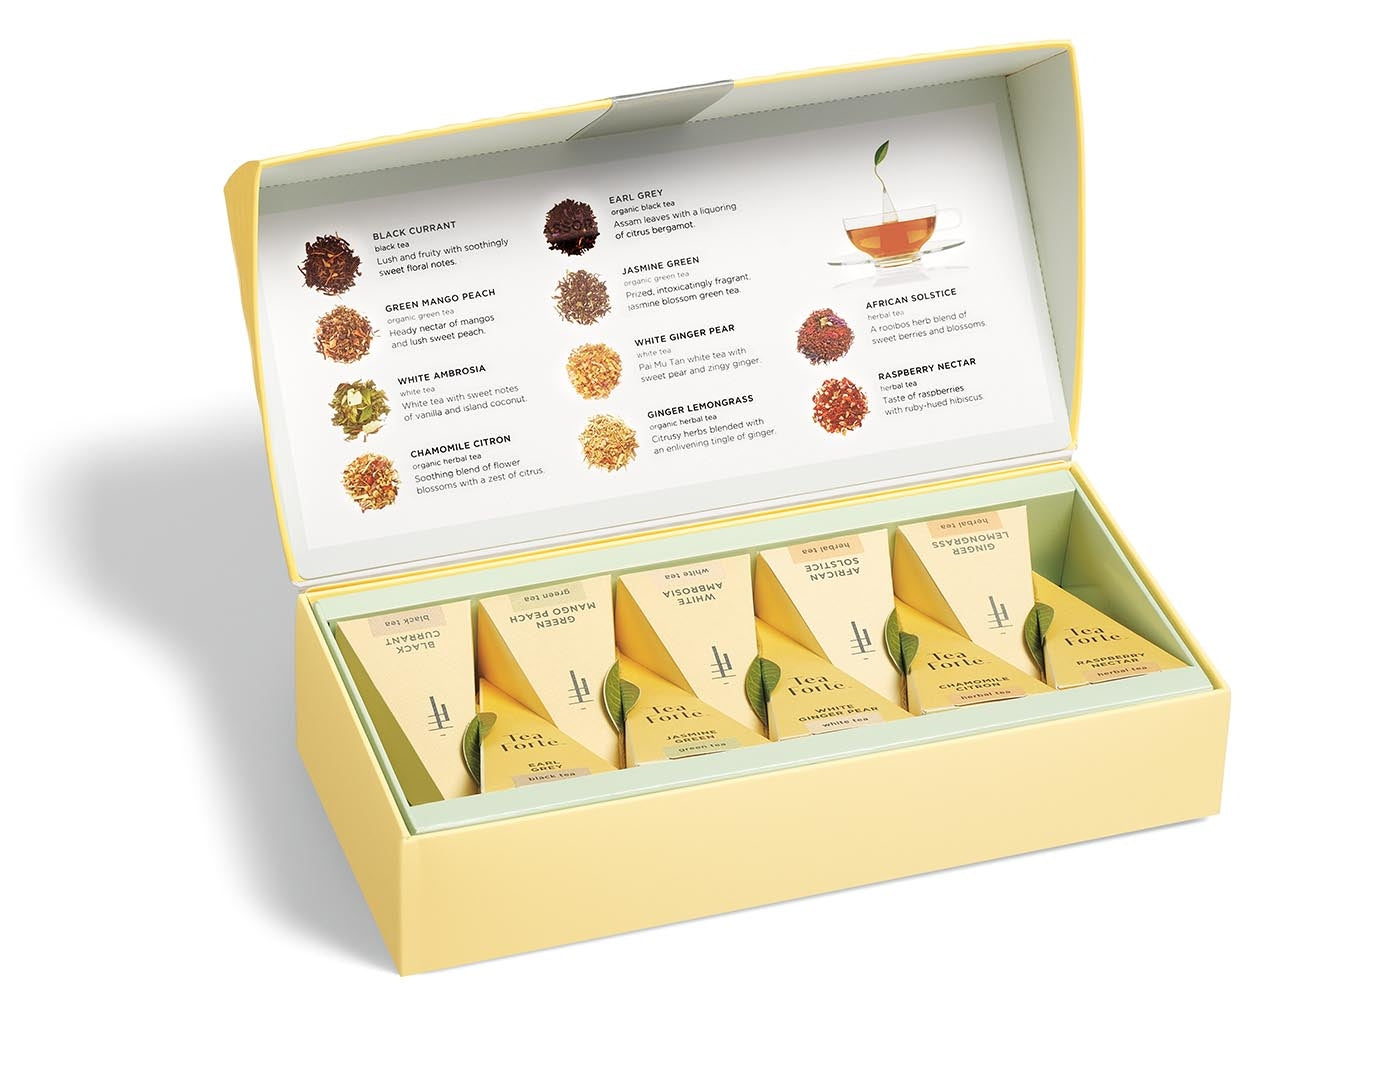 Tea Tasting tea assortment in a 10 count petite presentation box with lid open